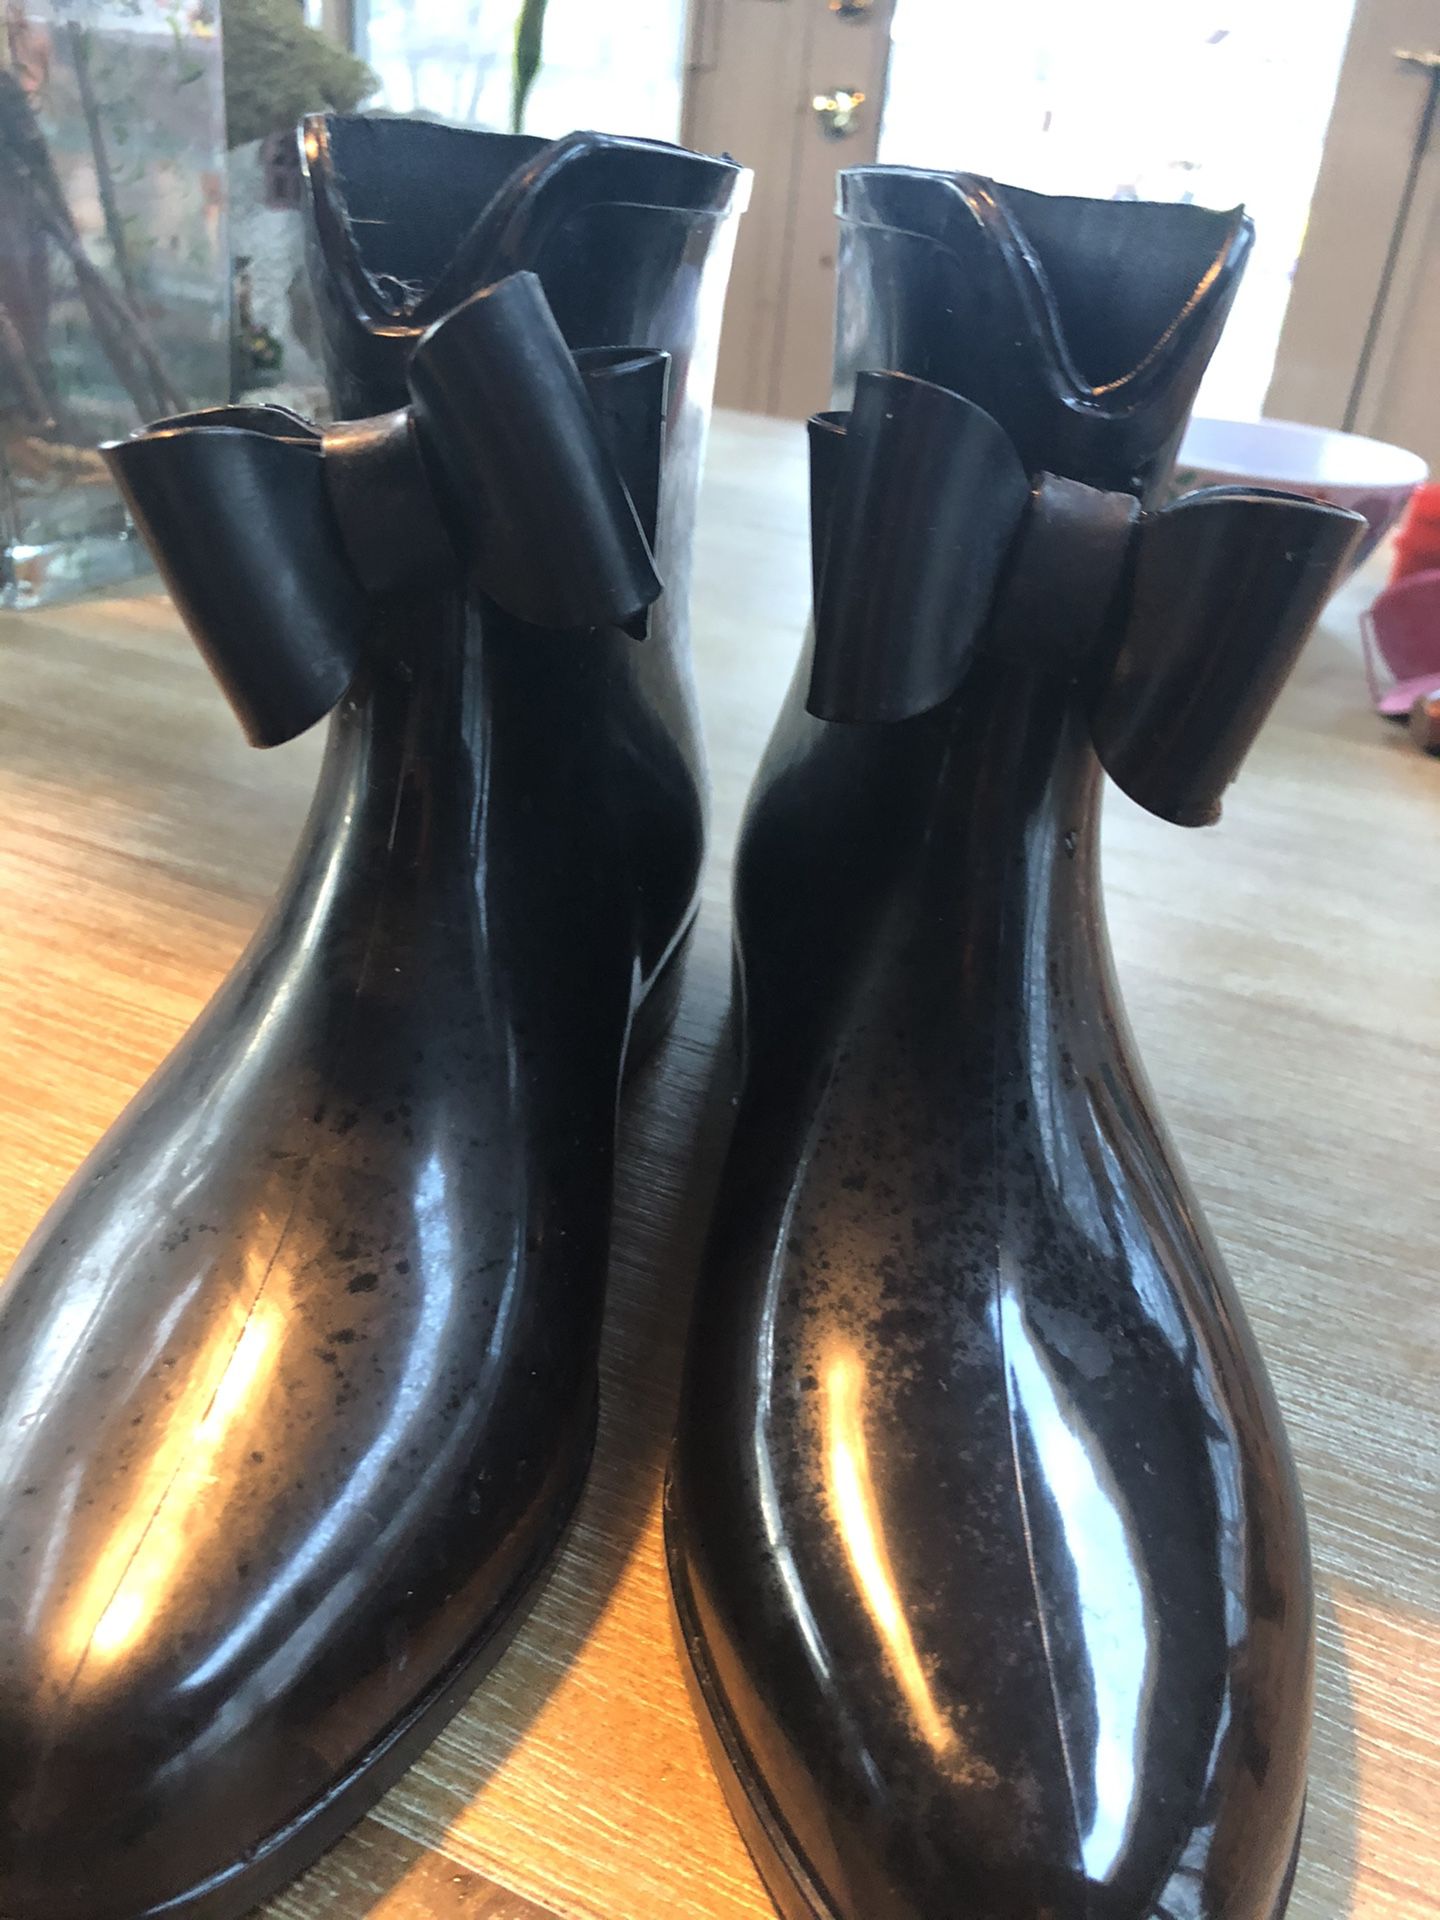 Kate Spade wellies (Rain Boots) - NEVER WORN